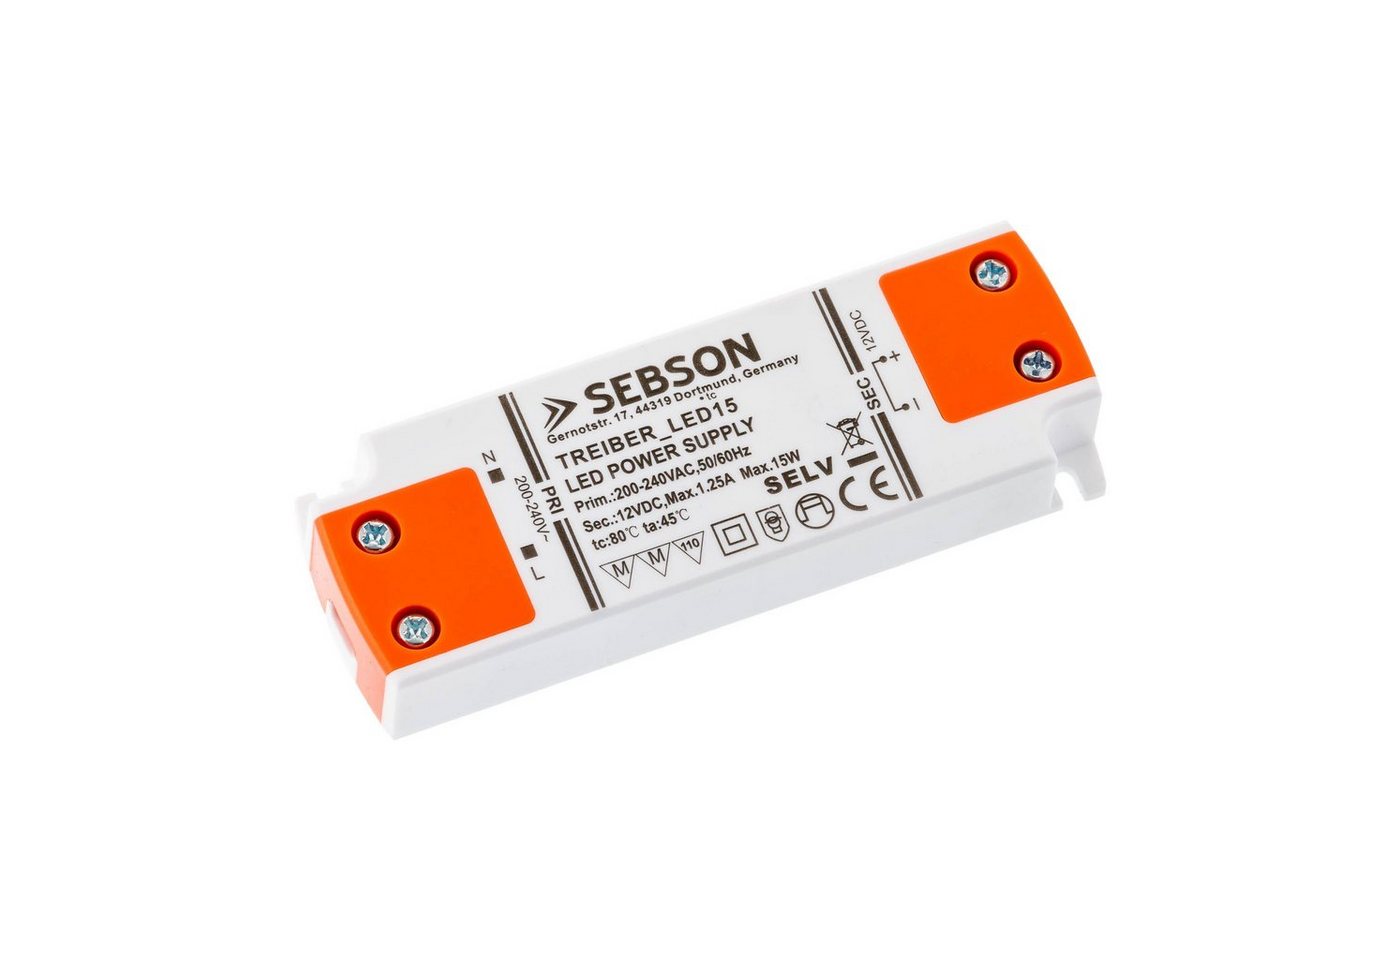 SEBSON 15W LED Treiber / LED Trafo - 12V Ausgangsspannung, Netzteil für LED Trafo von SEBSON